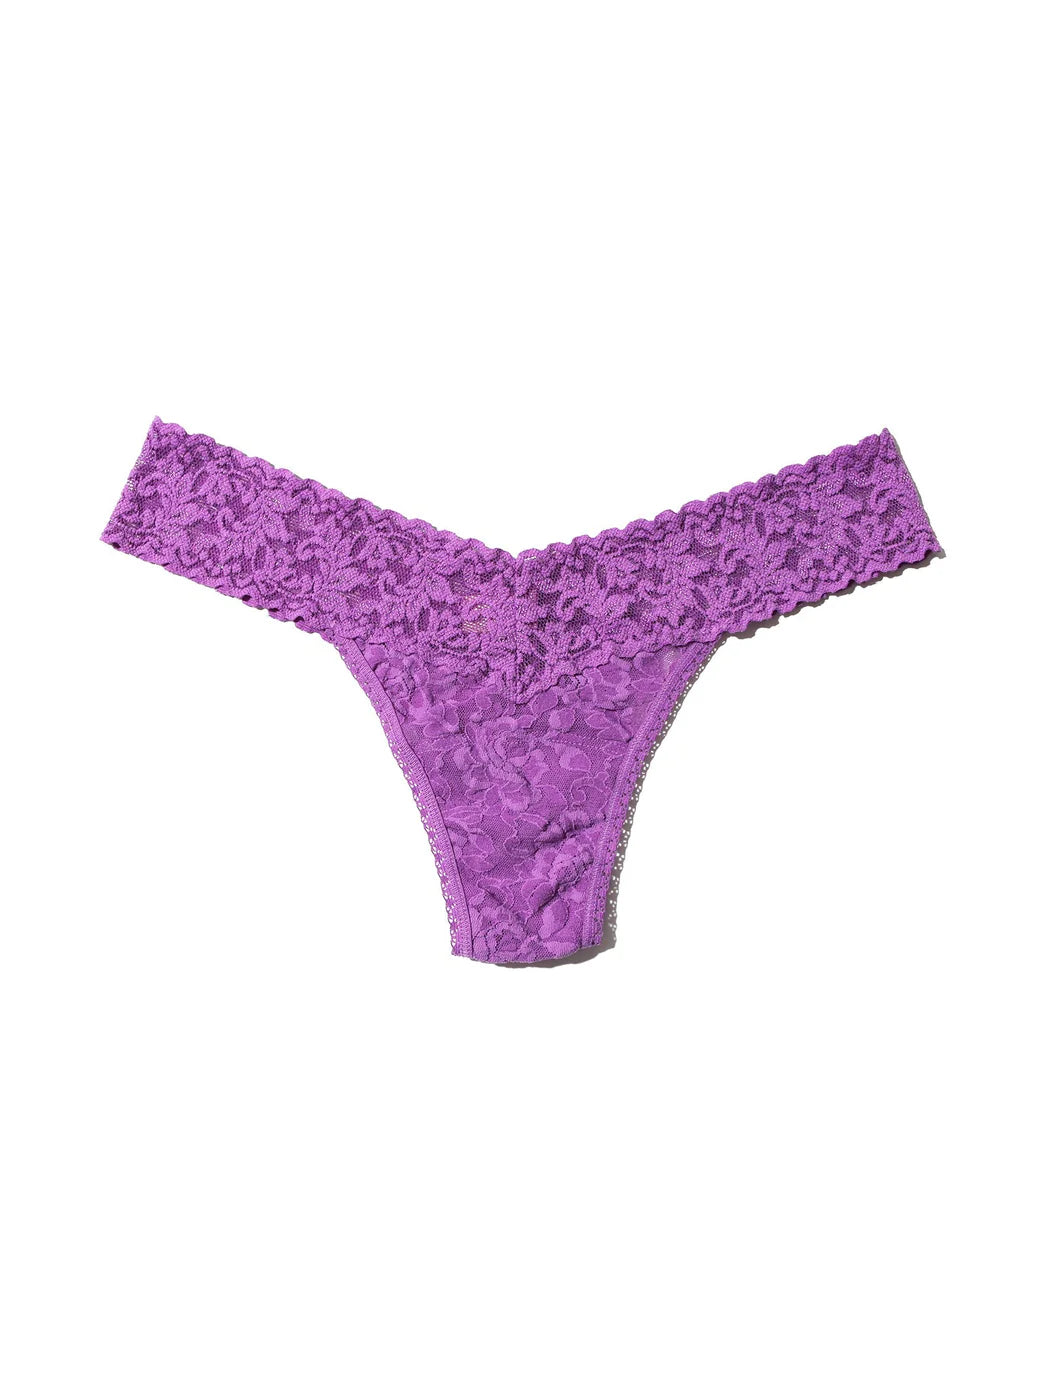 Buy violet-haze Hanky Panky Signature Lace Original Rise Thong-Packaged 4811p